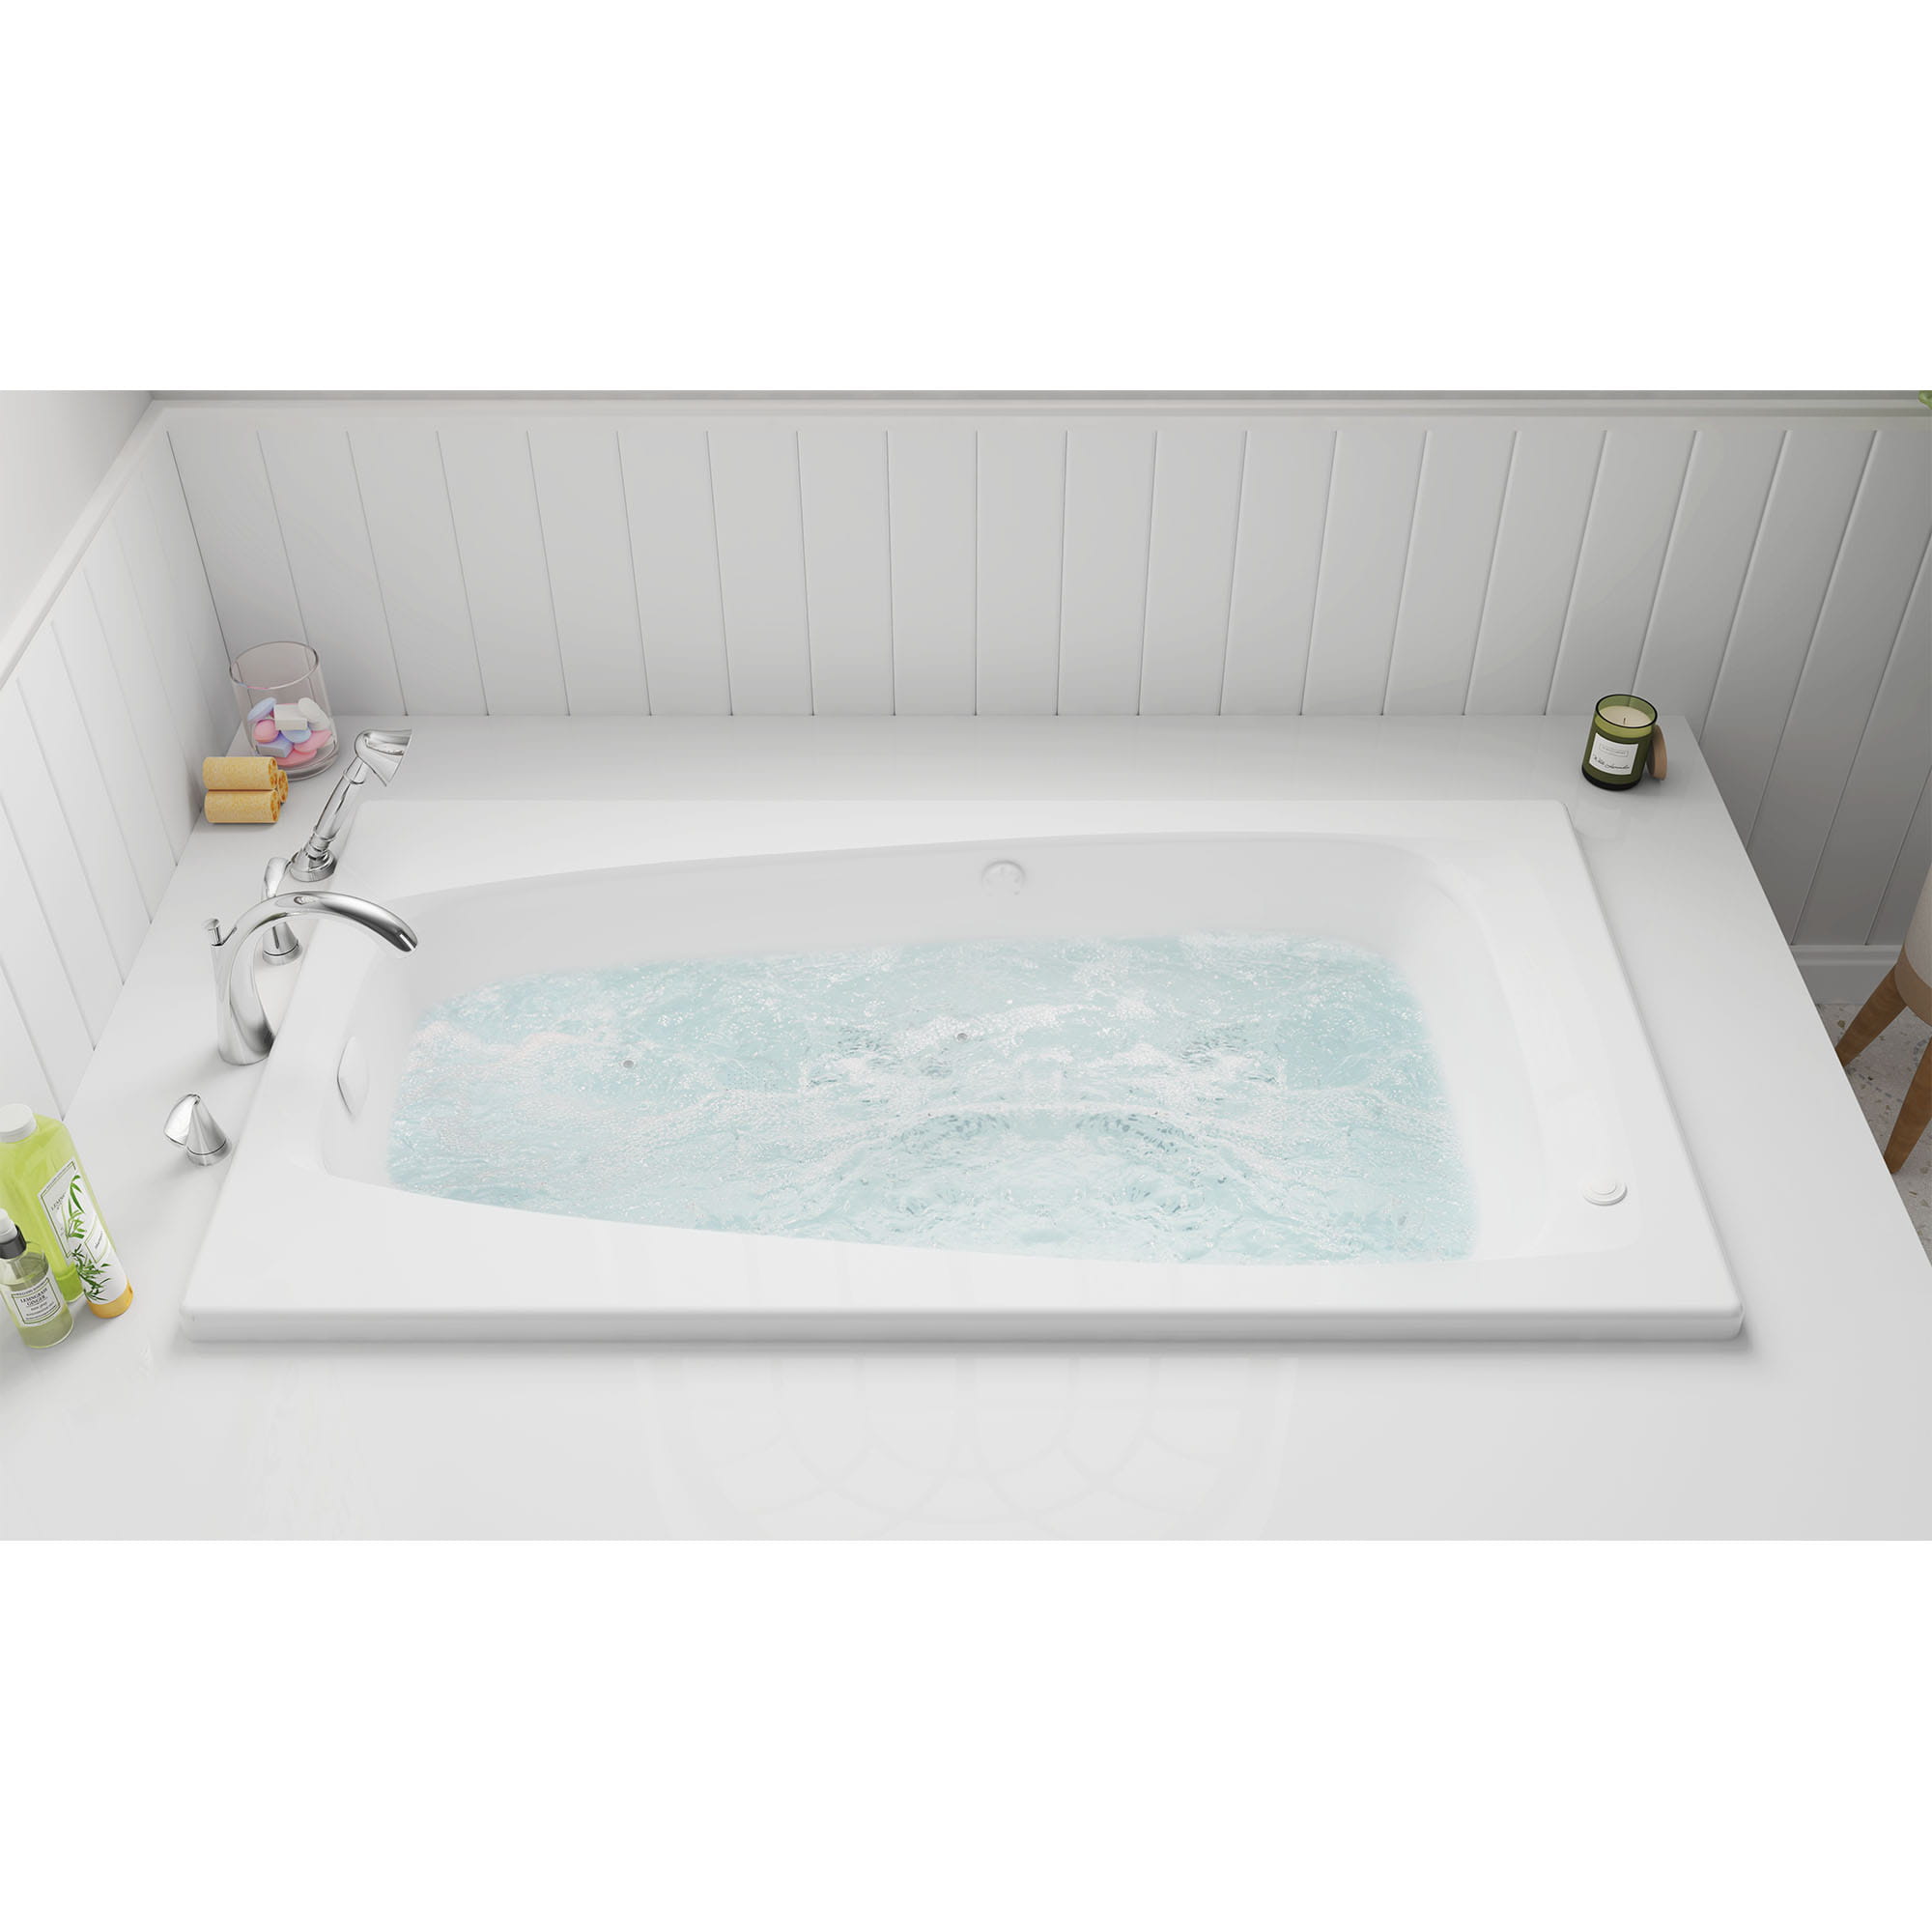 EverClean 60 in Acrylic Rectangular Drop In Whirlpool Bathtub WHITE